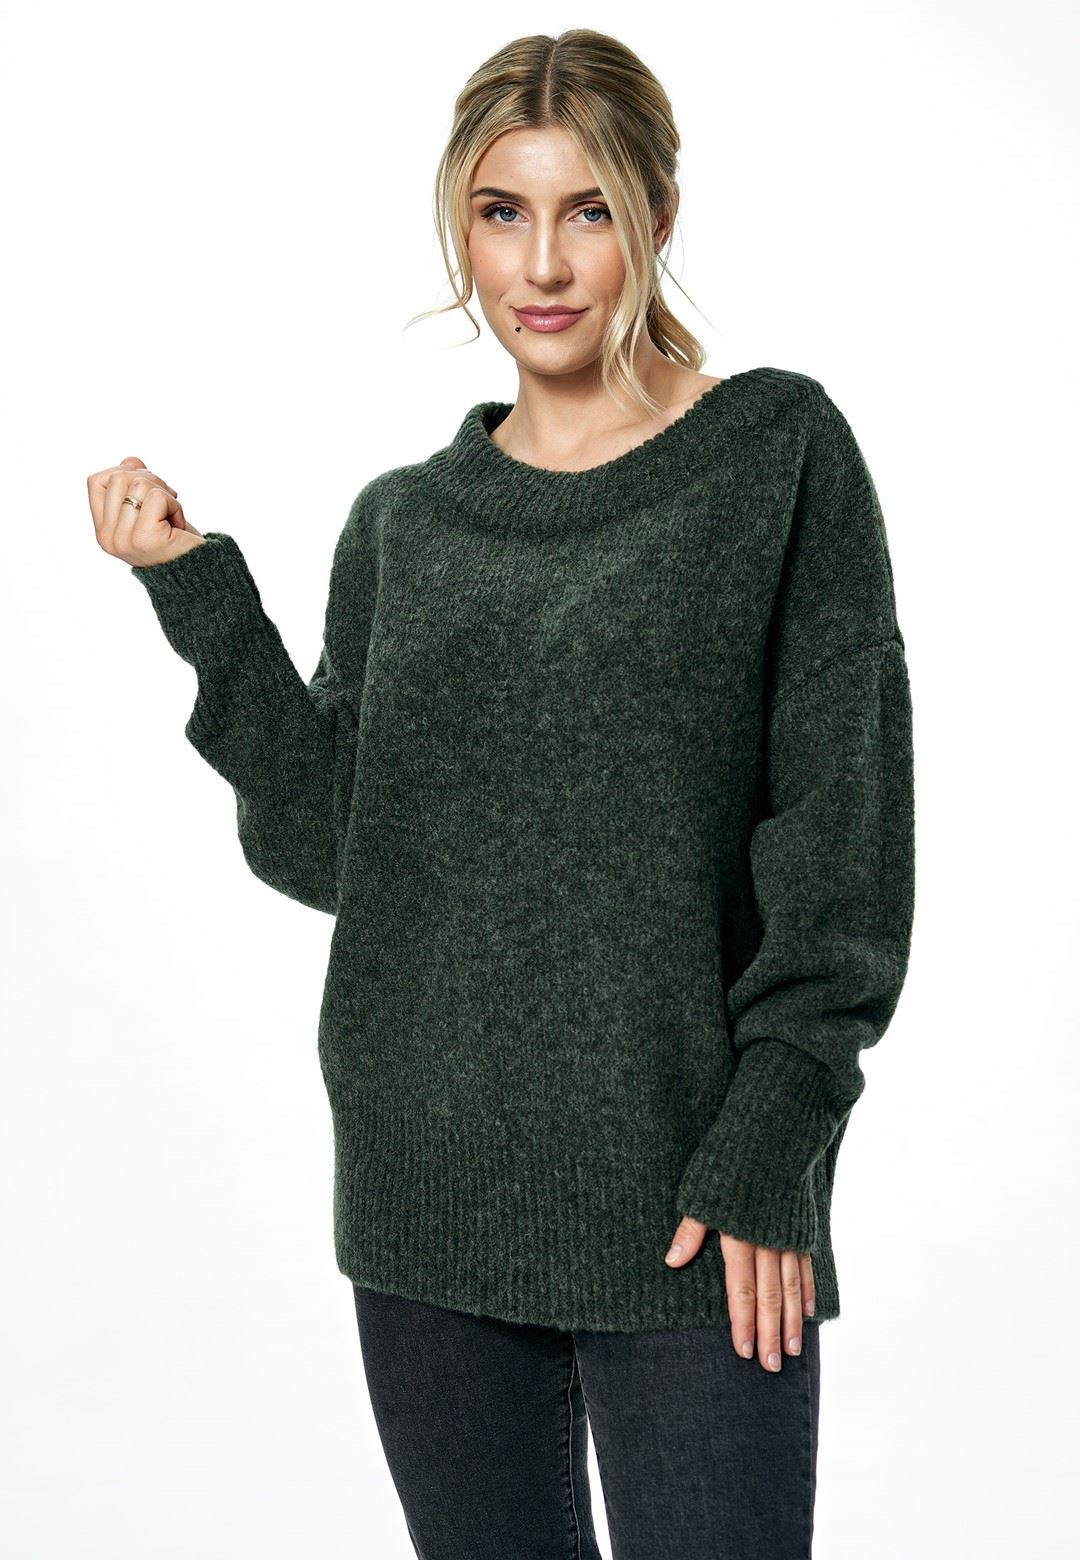 Sweater M882 Dark Olive Green Oversized